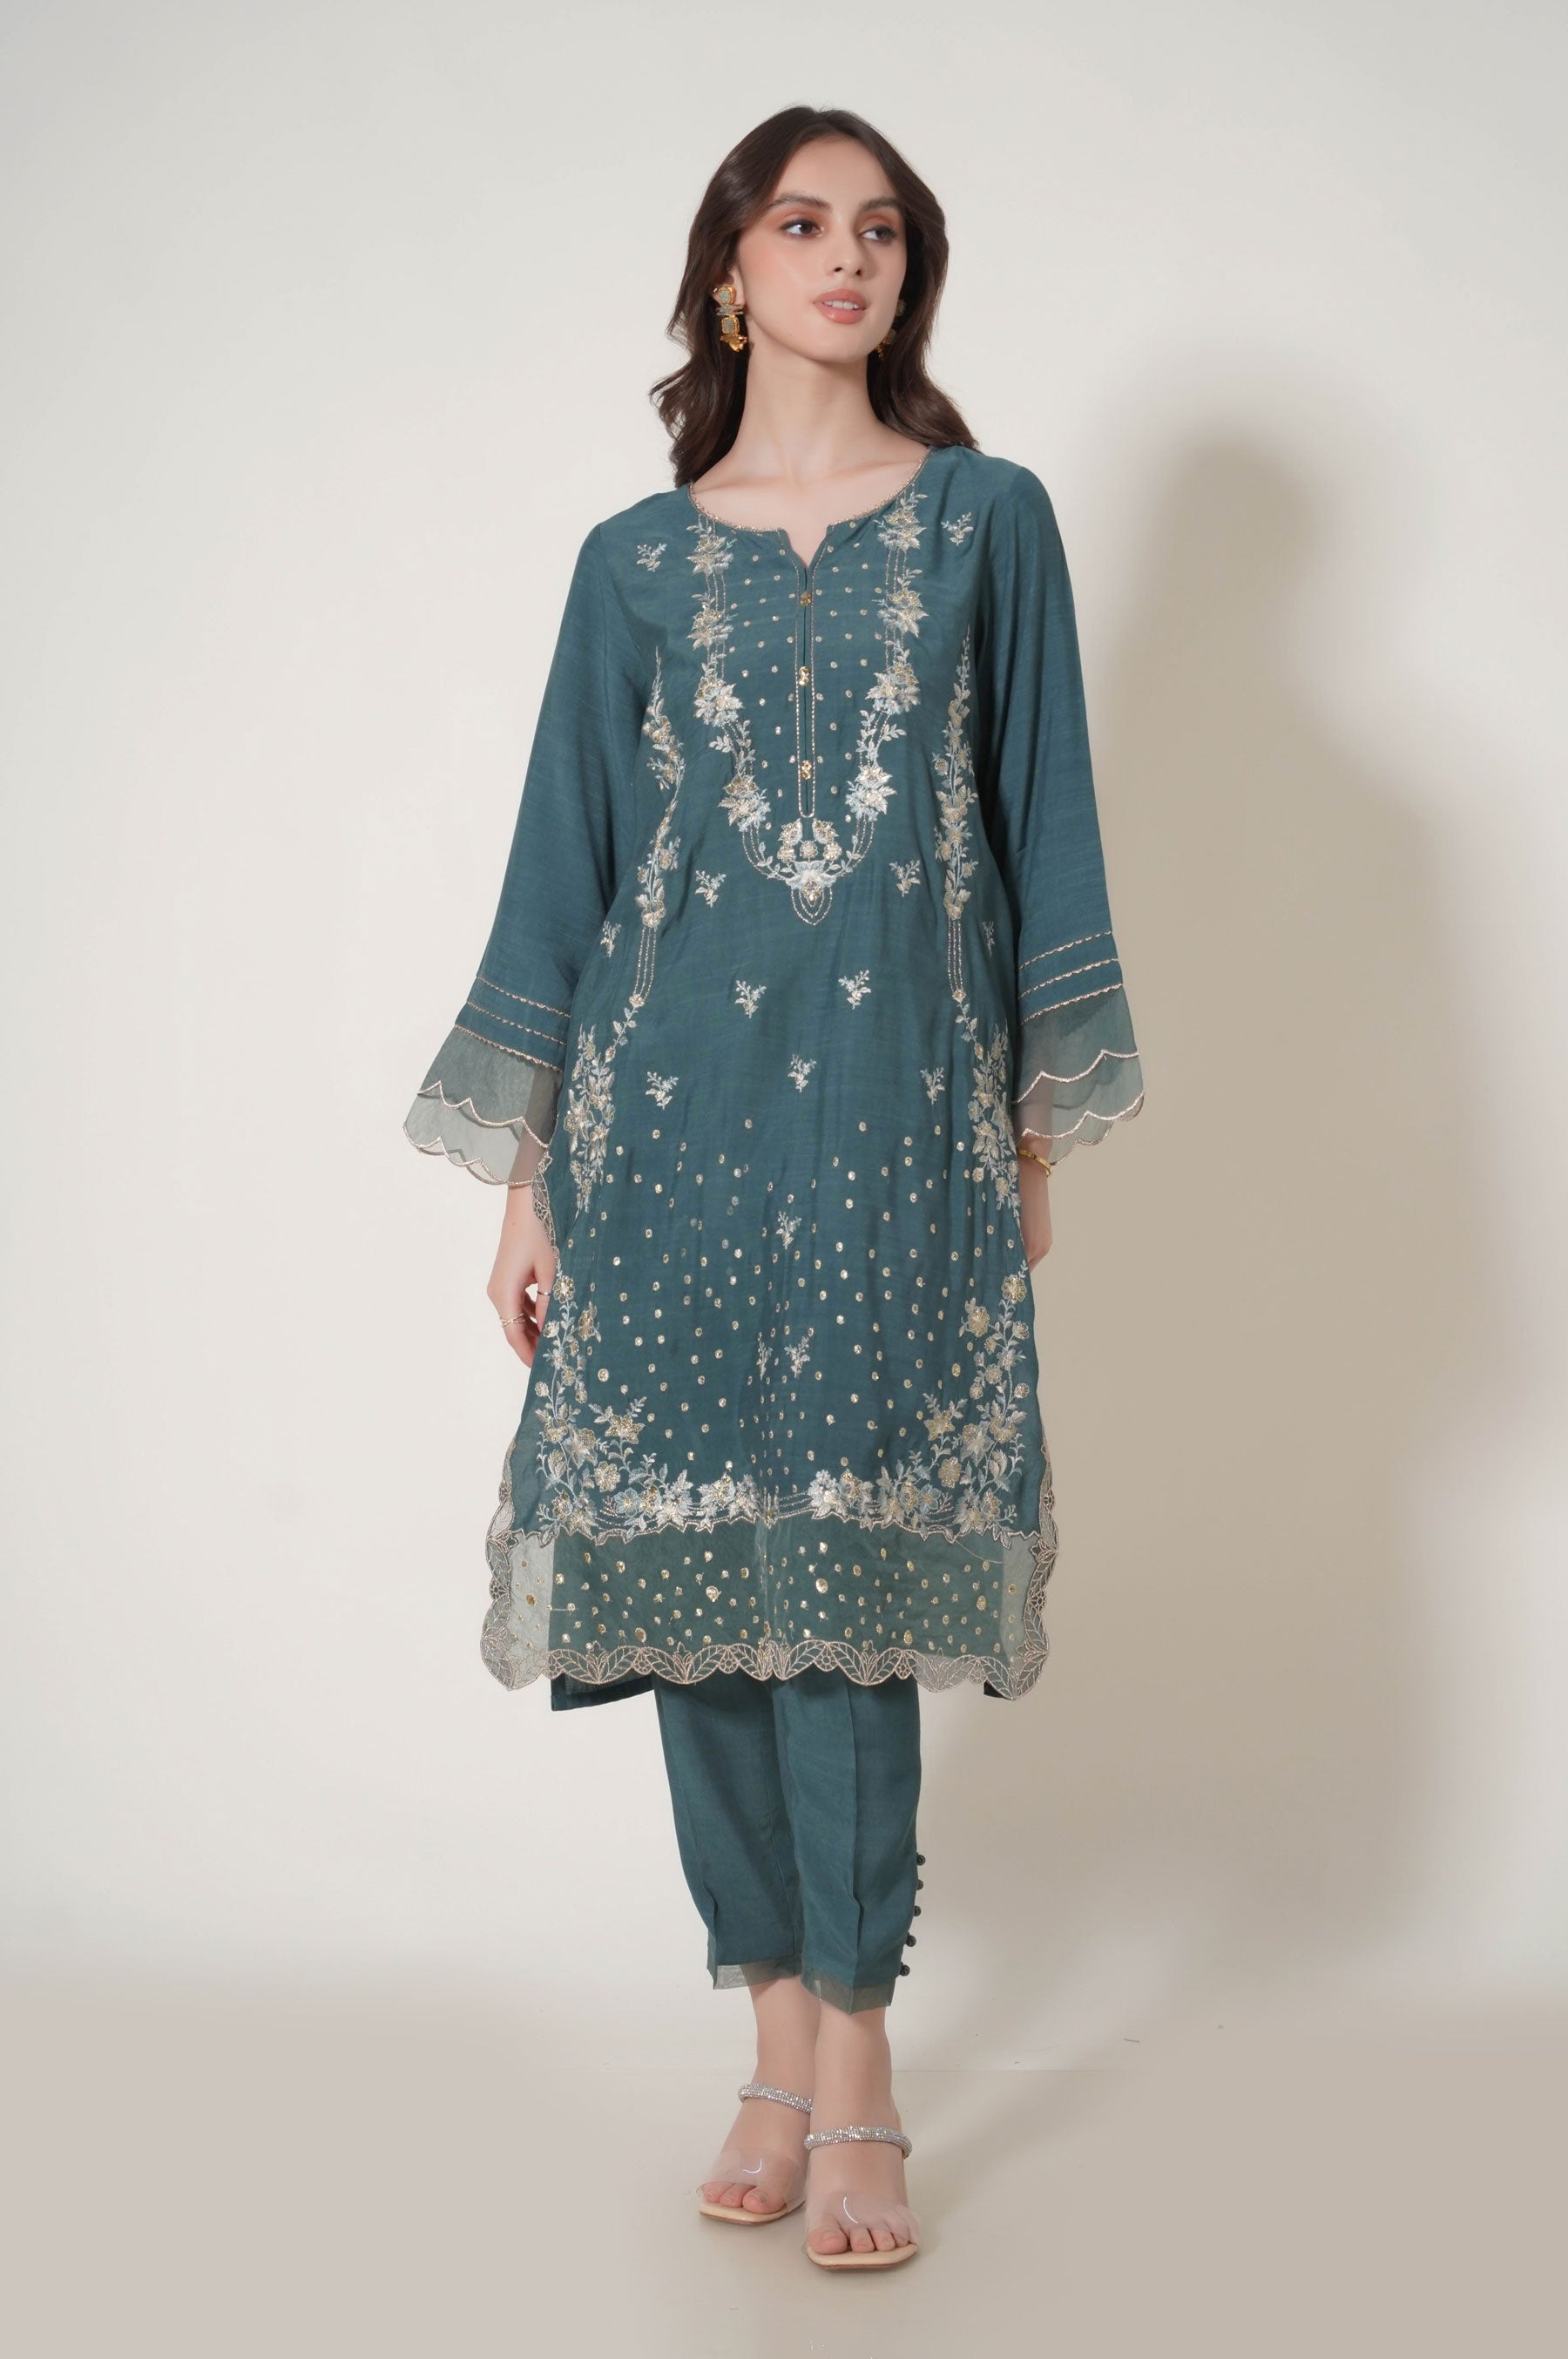 Zeen | Summer Collection 24 | 33238 - Khanumjan  Pakistani Clothes and Designer Dresses in UK, USA 